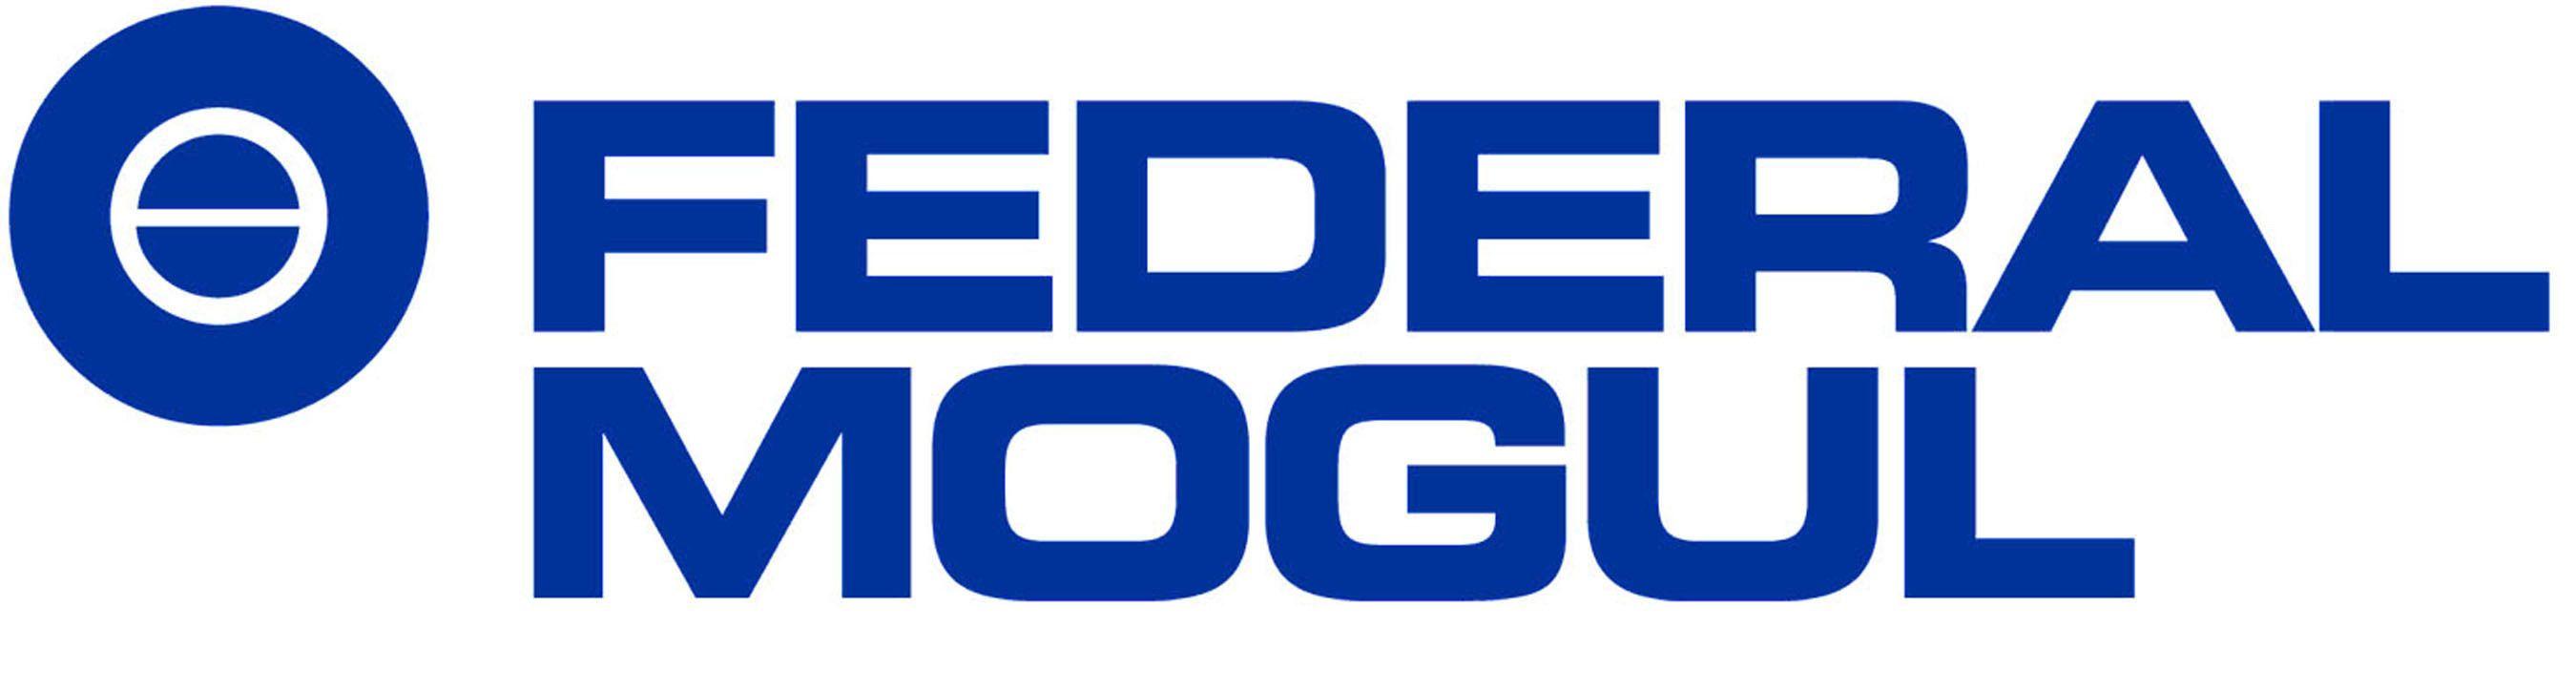 Federal Mogul Logo - FEDERAL-MOGUL CORPORATION LOGO - City Training Services ...